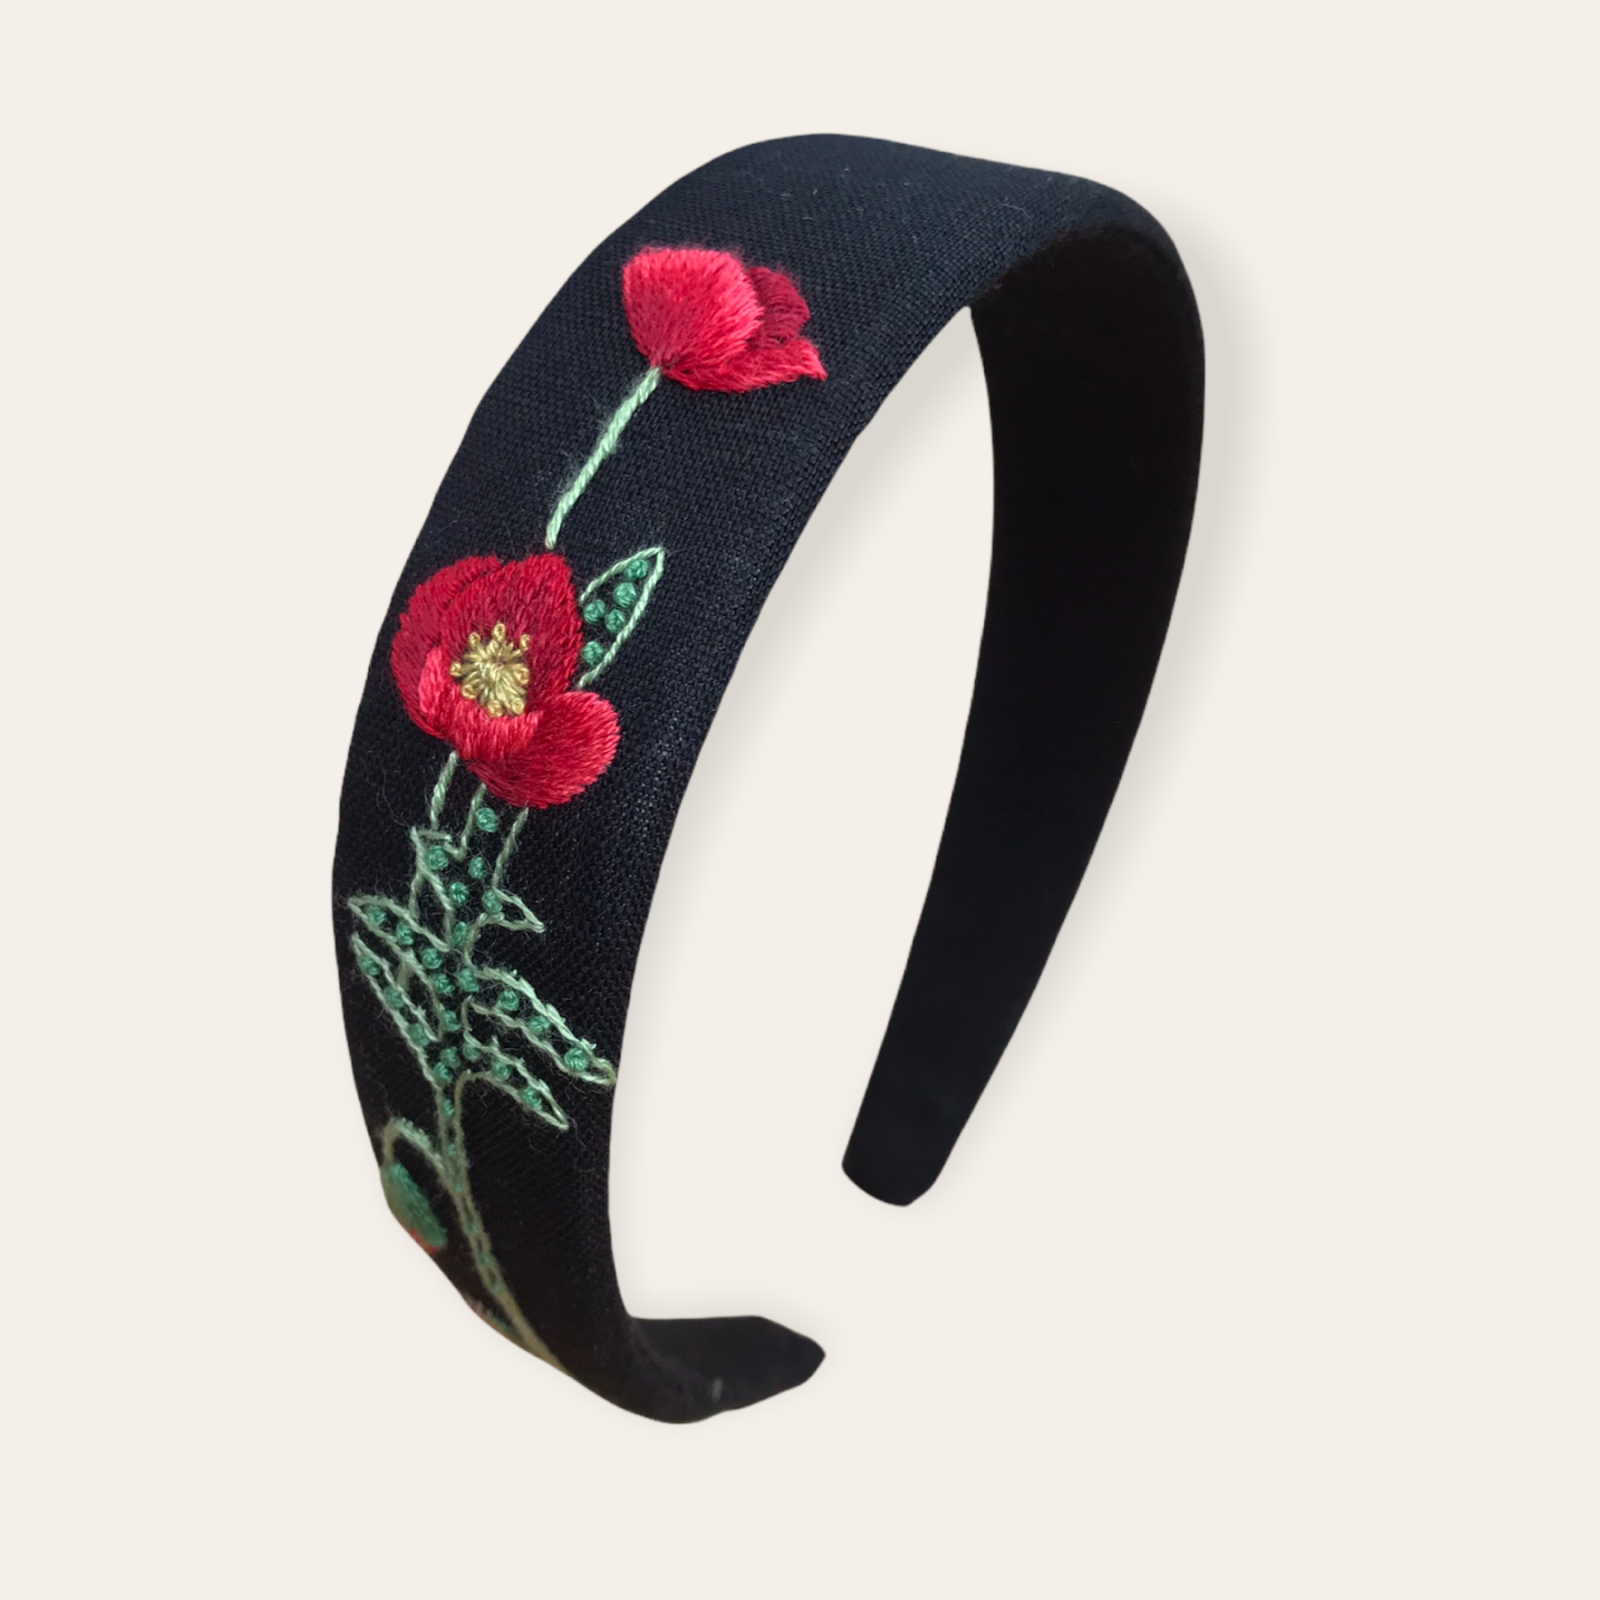 Floraler Haarreif mit bestickte Mohnblume/ rote Rosen 2